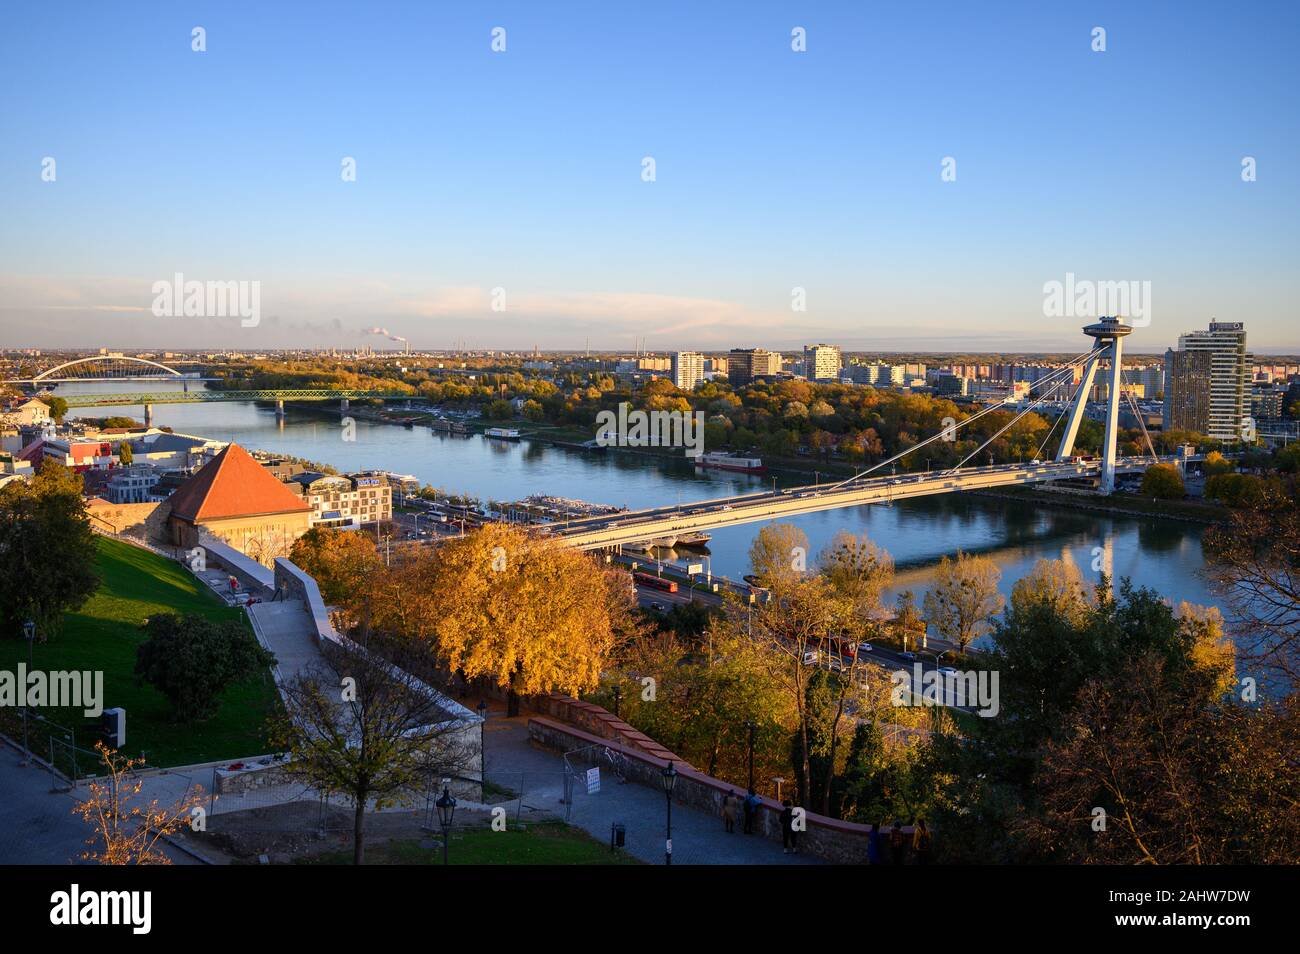 The SNP bridge spanning the river Danube in Bratislava. SNP is a Slovak abbreviation for Slovak National Uprising. Stock Photo